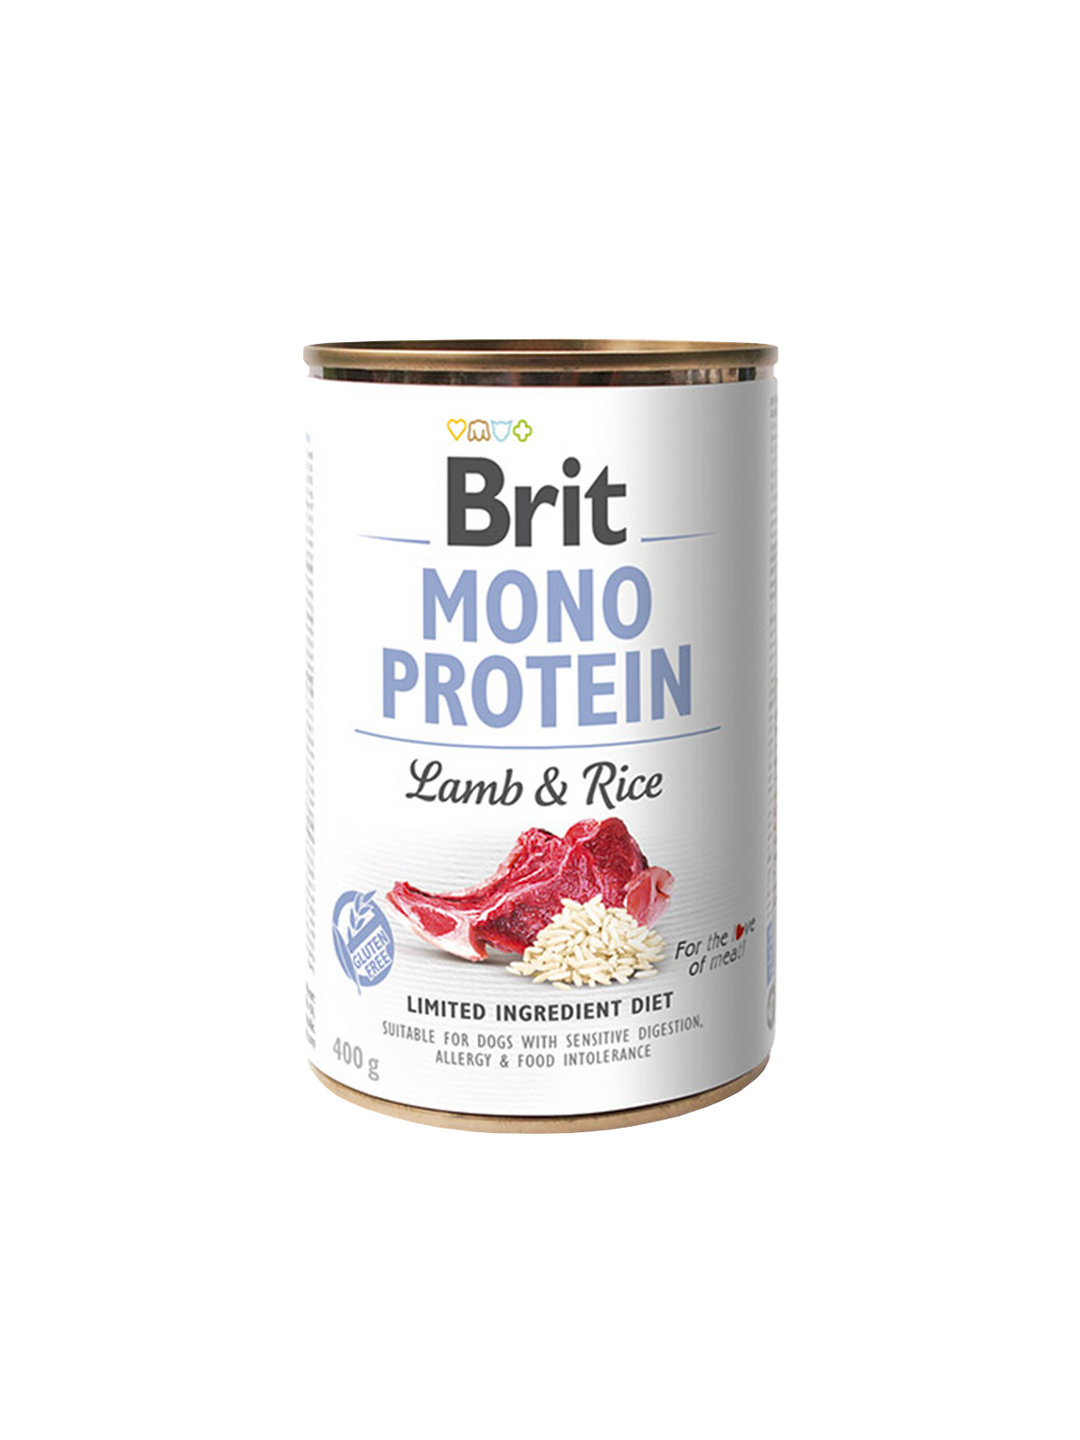 Brit Mono Protein tins 400g - Lamb & Rice